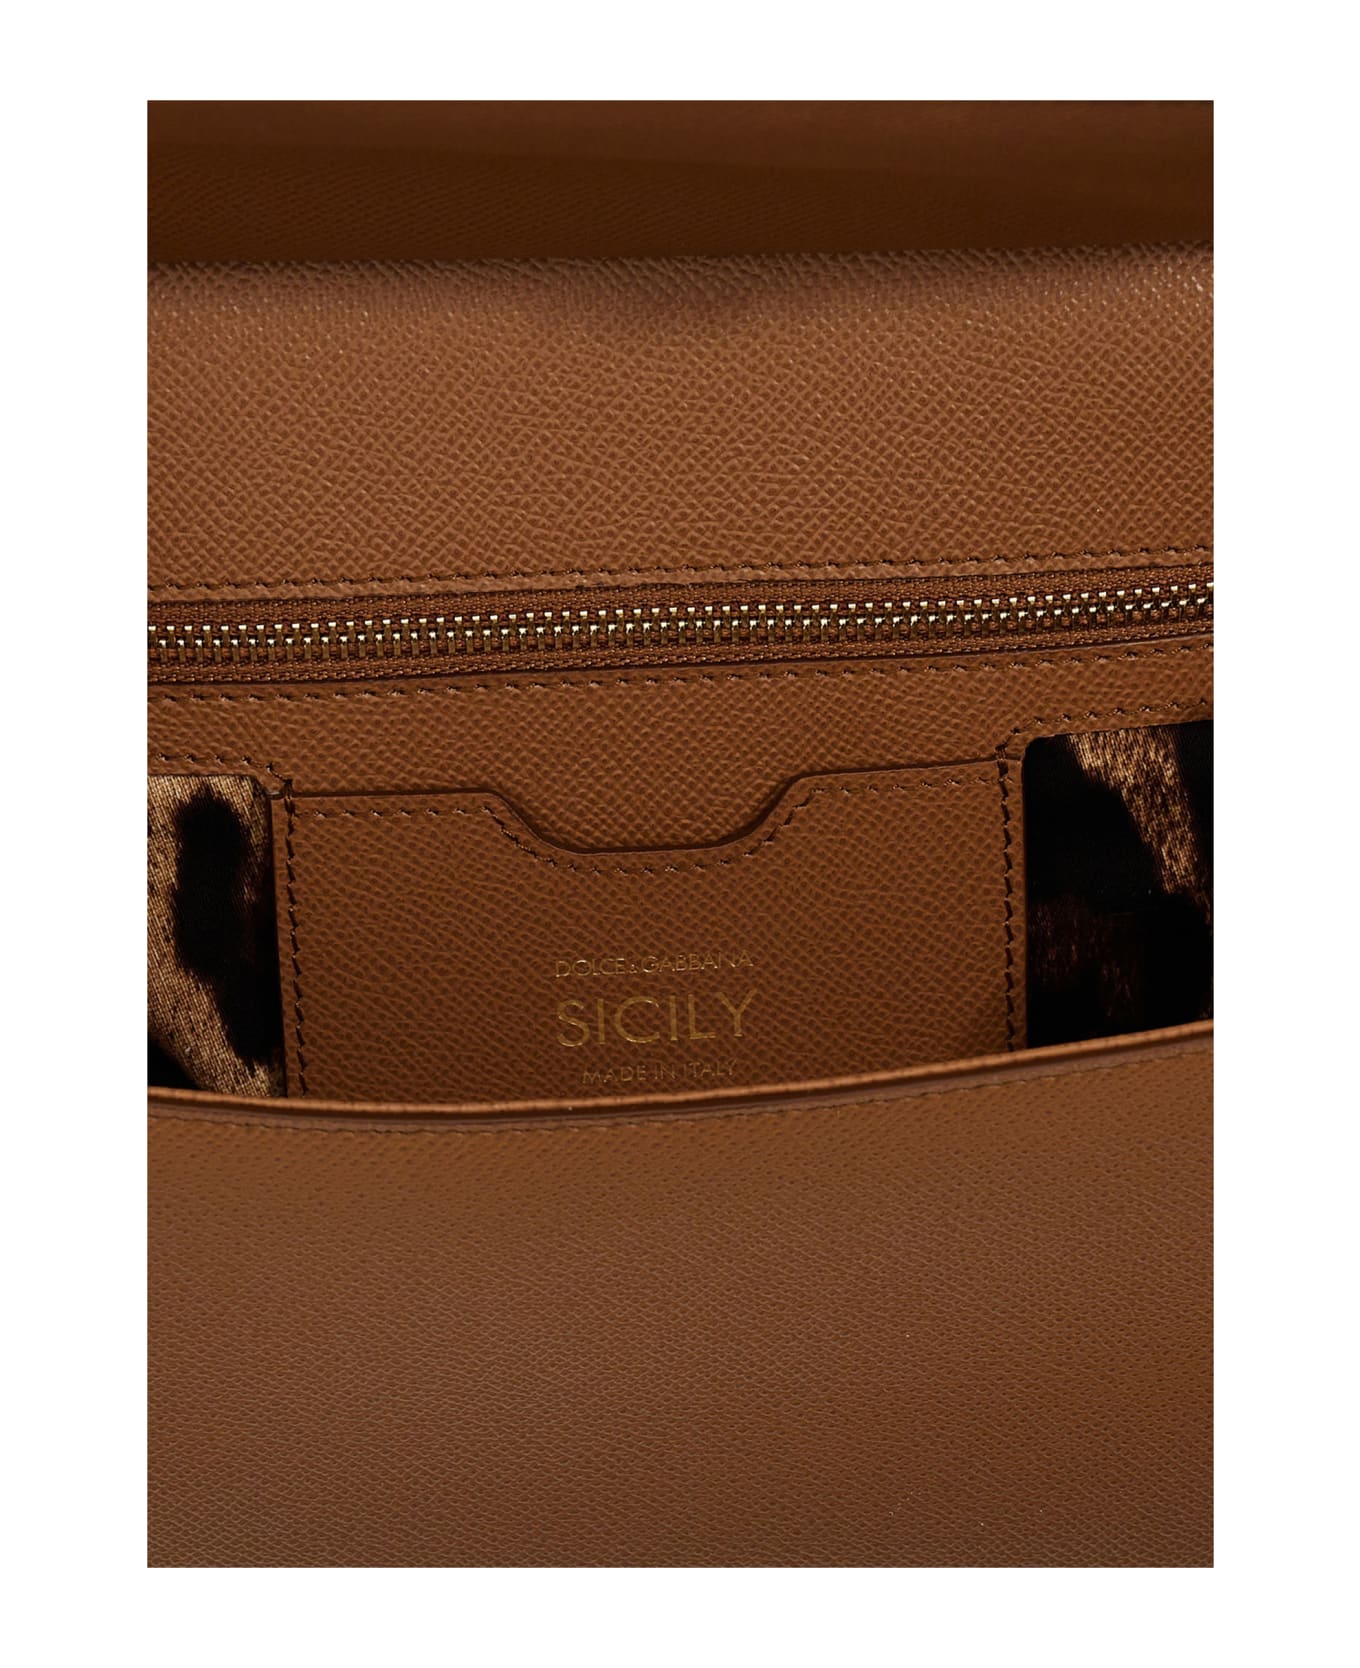 Dolce & Gabbana 'sicily' Handbag - Brown トートバッグ